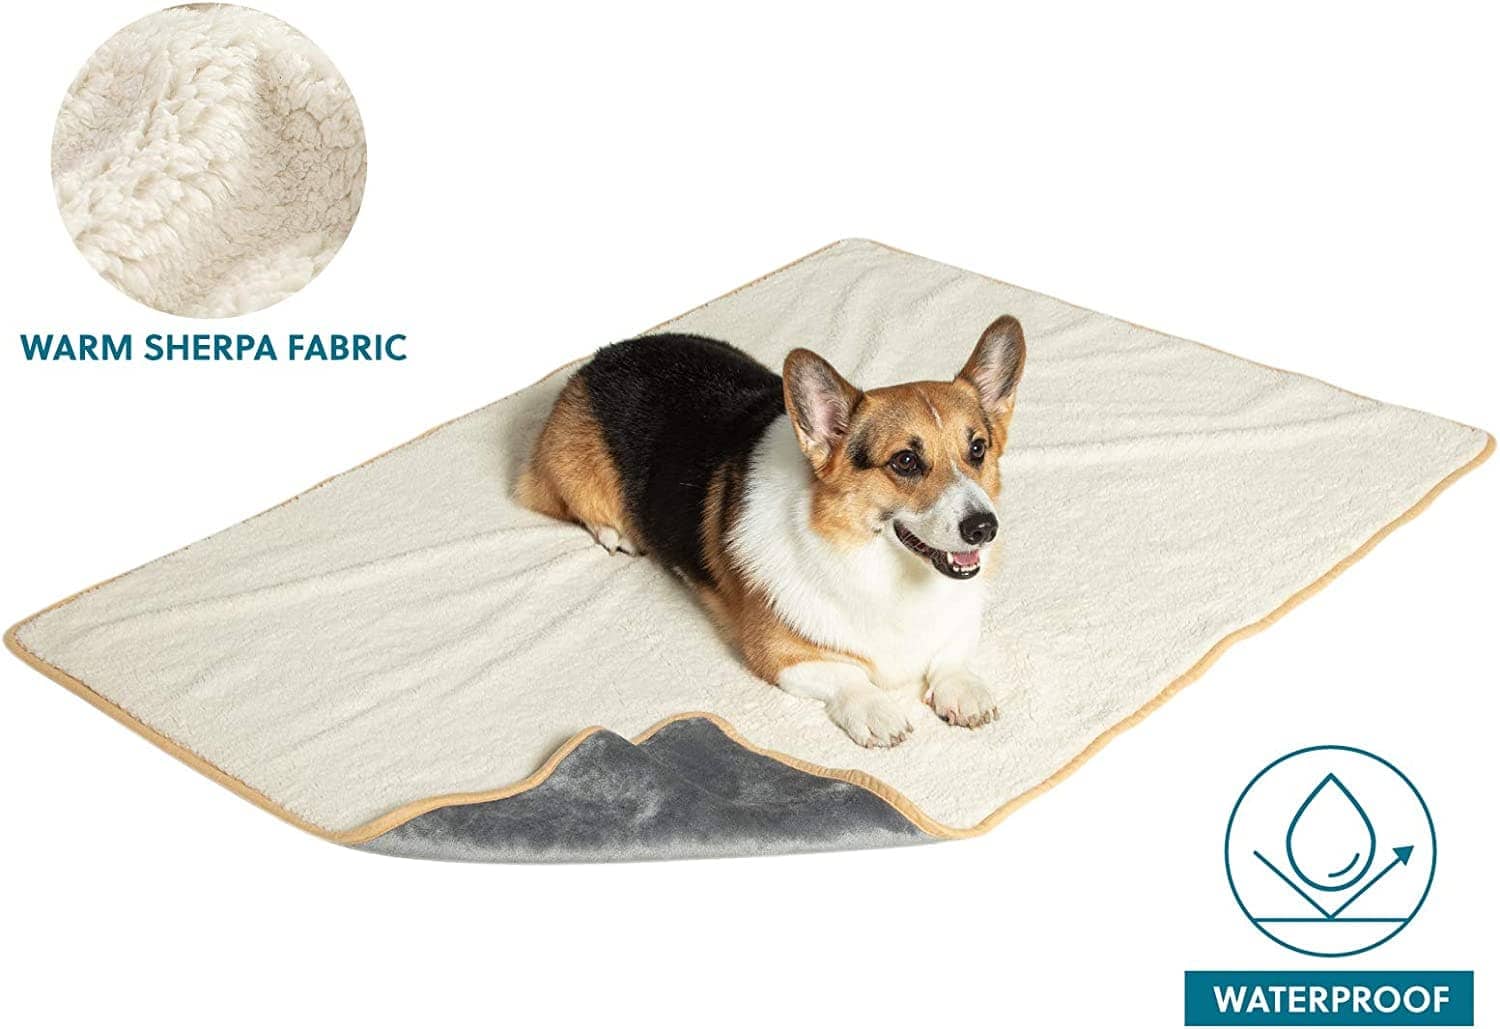 Bedsure Waterproof Dog Blanket super soft plush